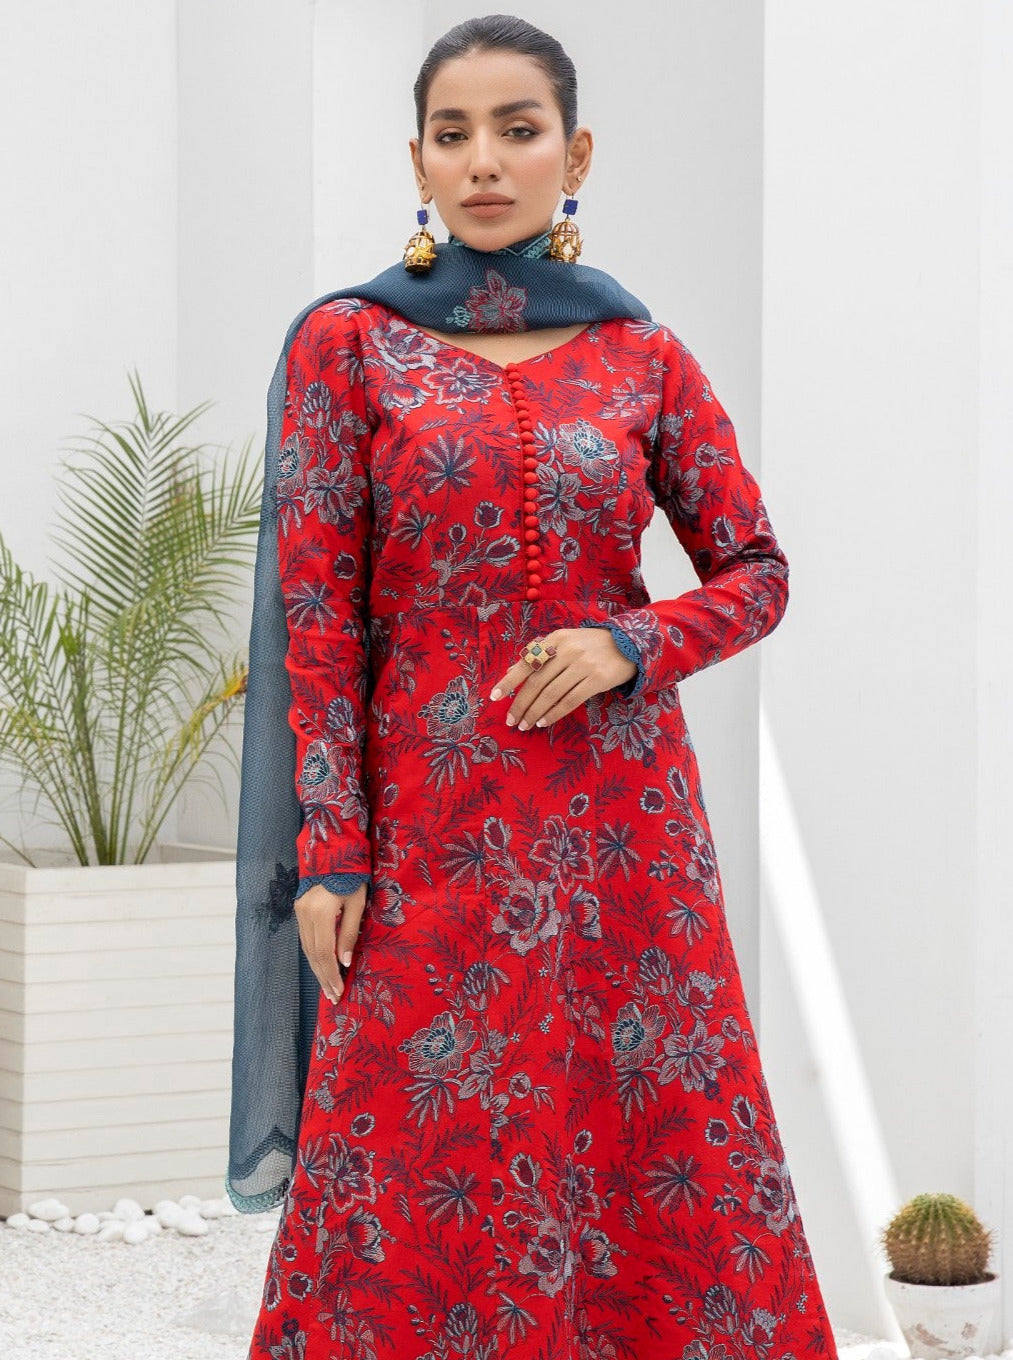 50 Latest Back Neck Designs For Kurti and Salwar Suits (2022) - Tips and  Beauty | Kurti neck designs, Neck designs for suits, Kurti back neck designs